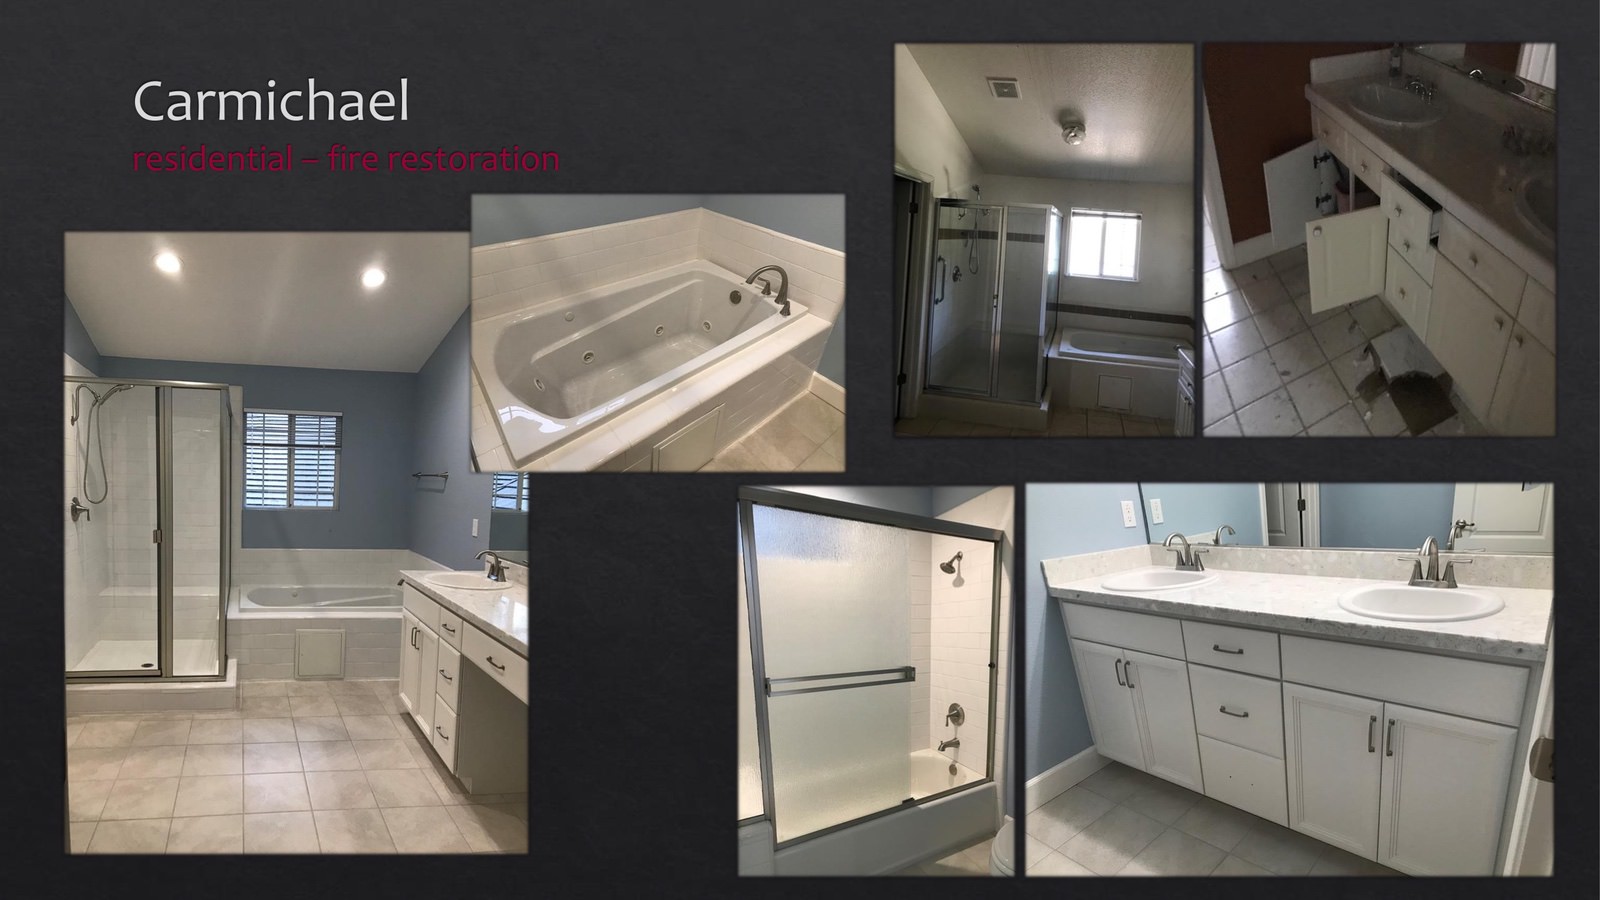 Carmichael Residential fire restoration - bathroom - lightbox